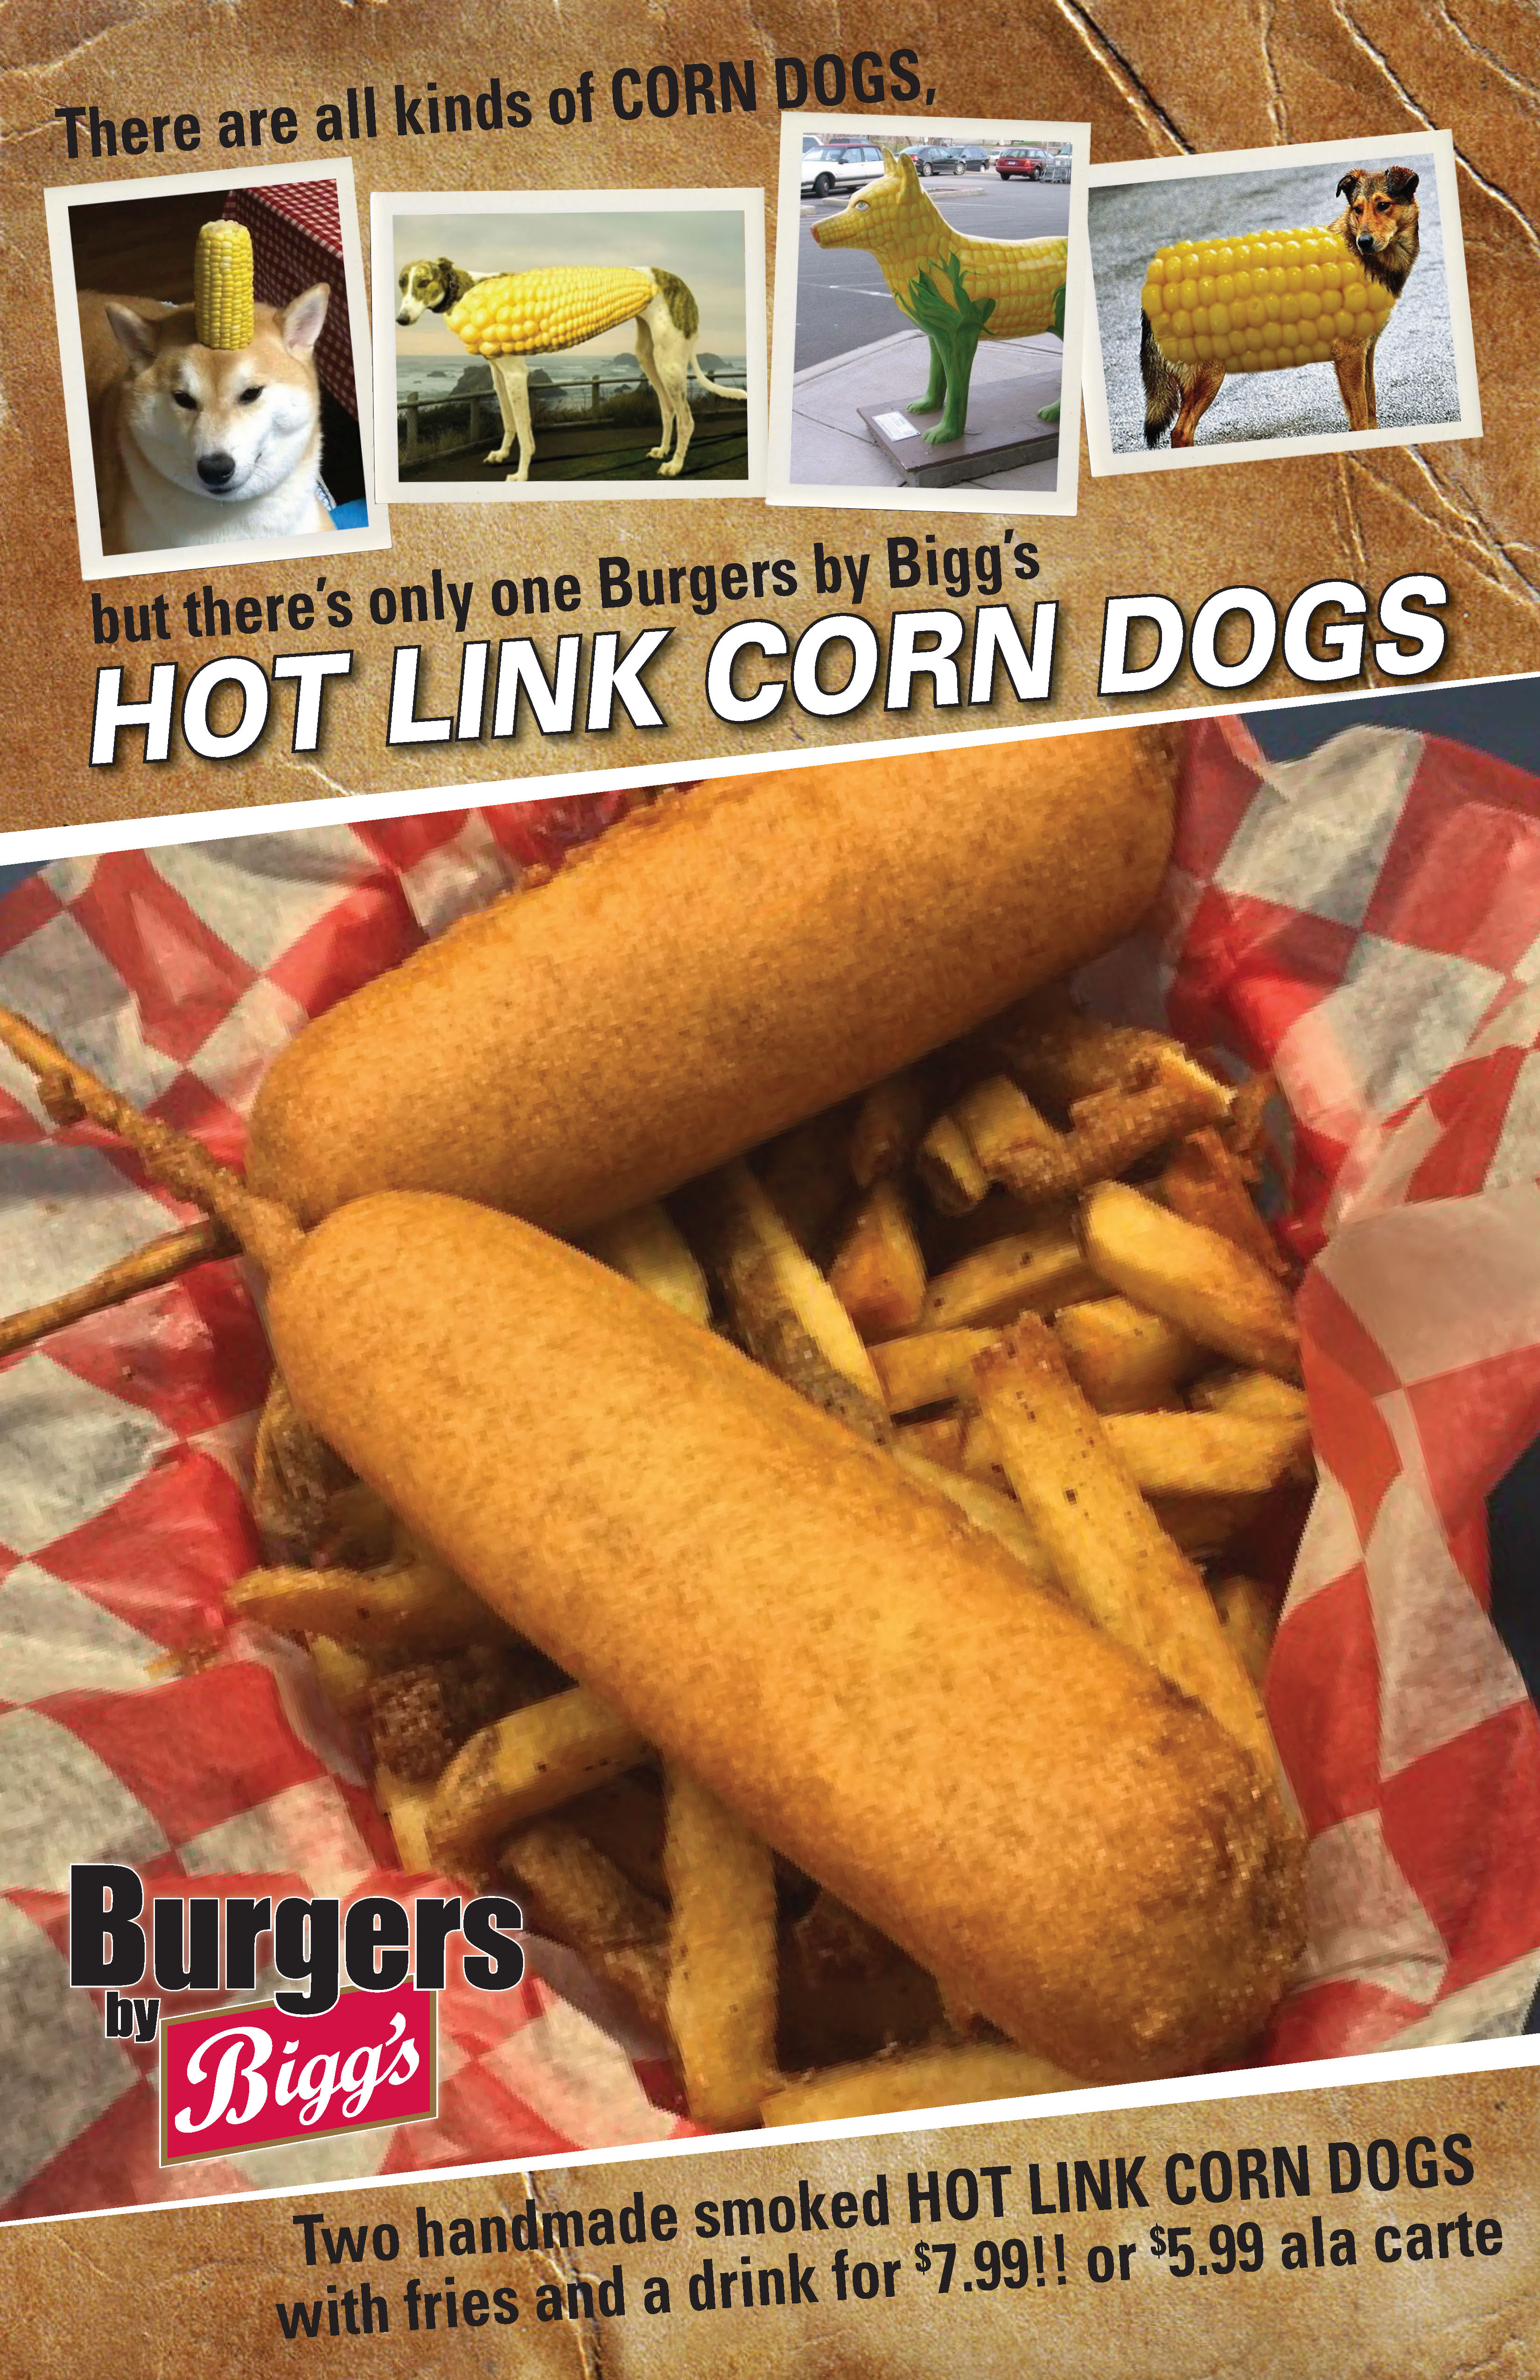 April 2017 - Hot Link Corn Dogs